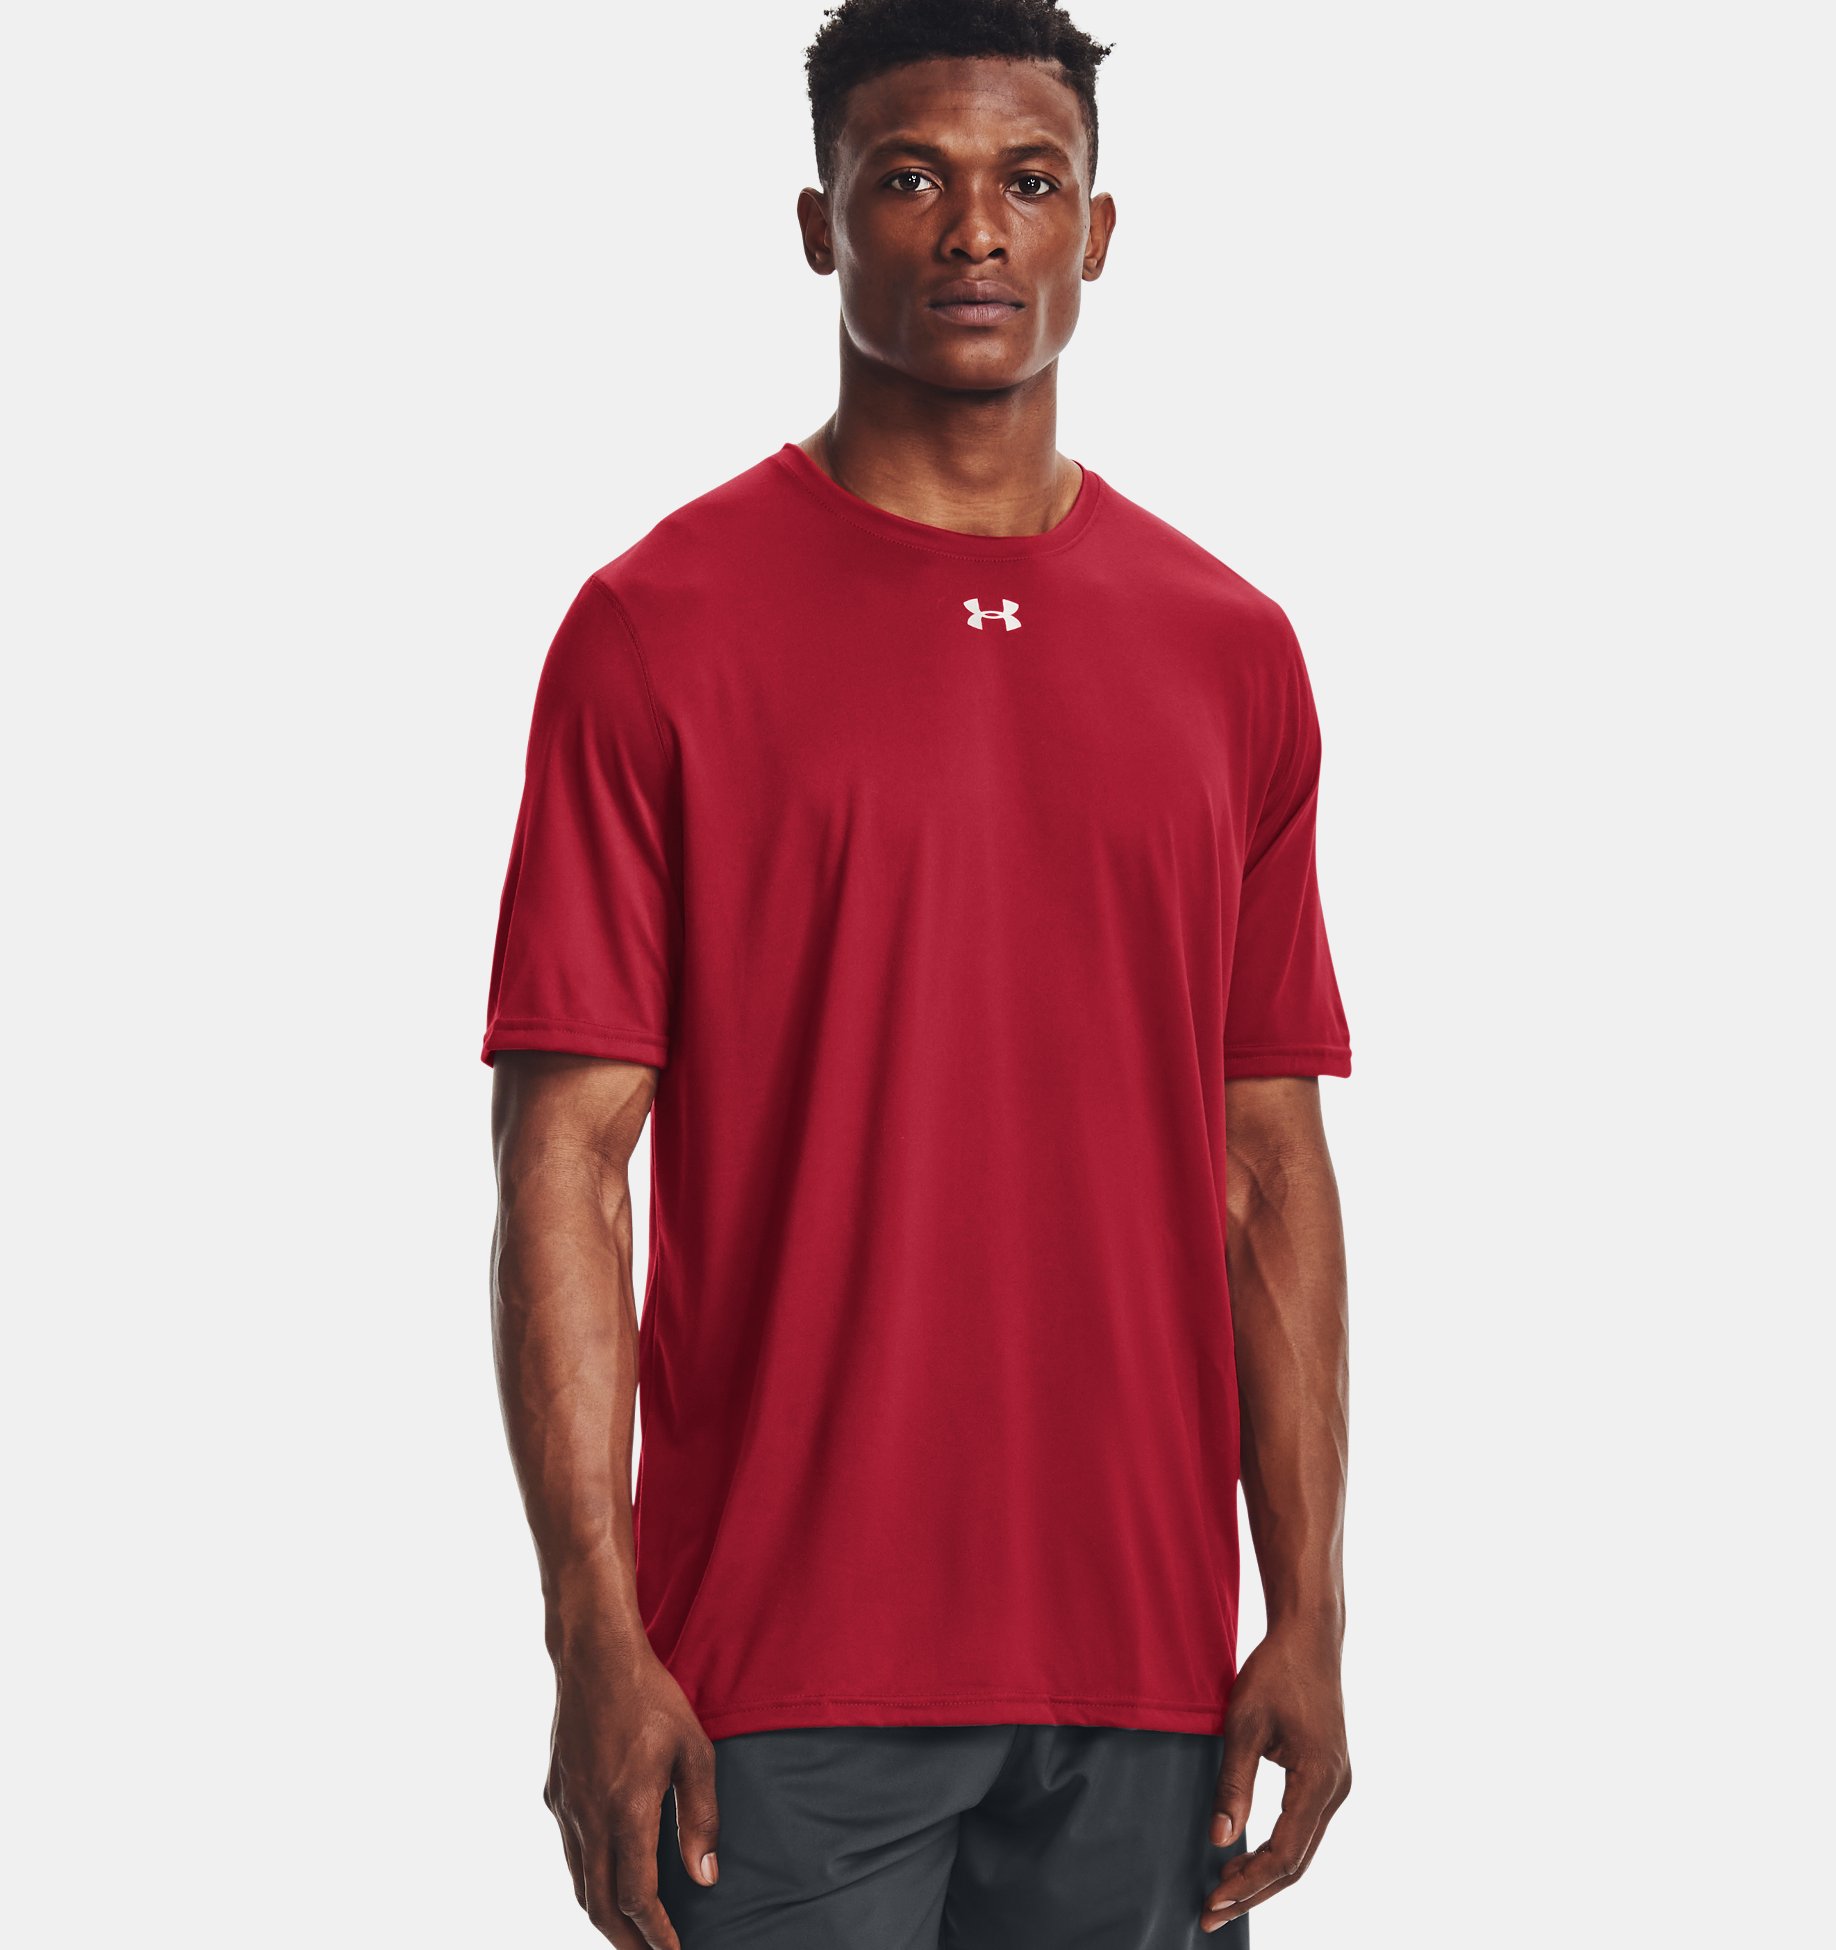 Under Armour Men's UA Tech Locker 2.0 T-Shirt Short Sleeve Athletic Flawless Red 